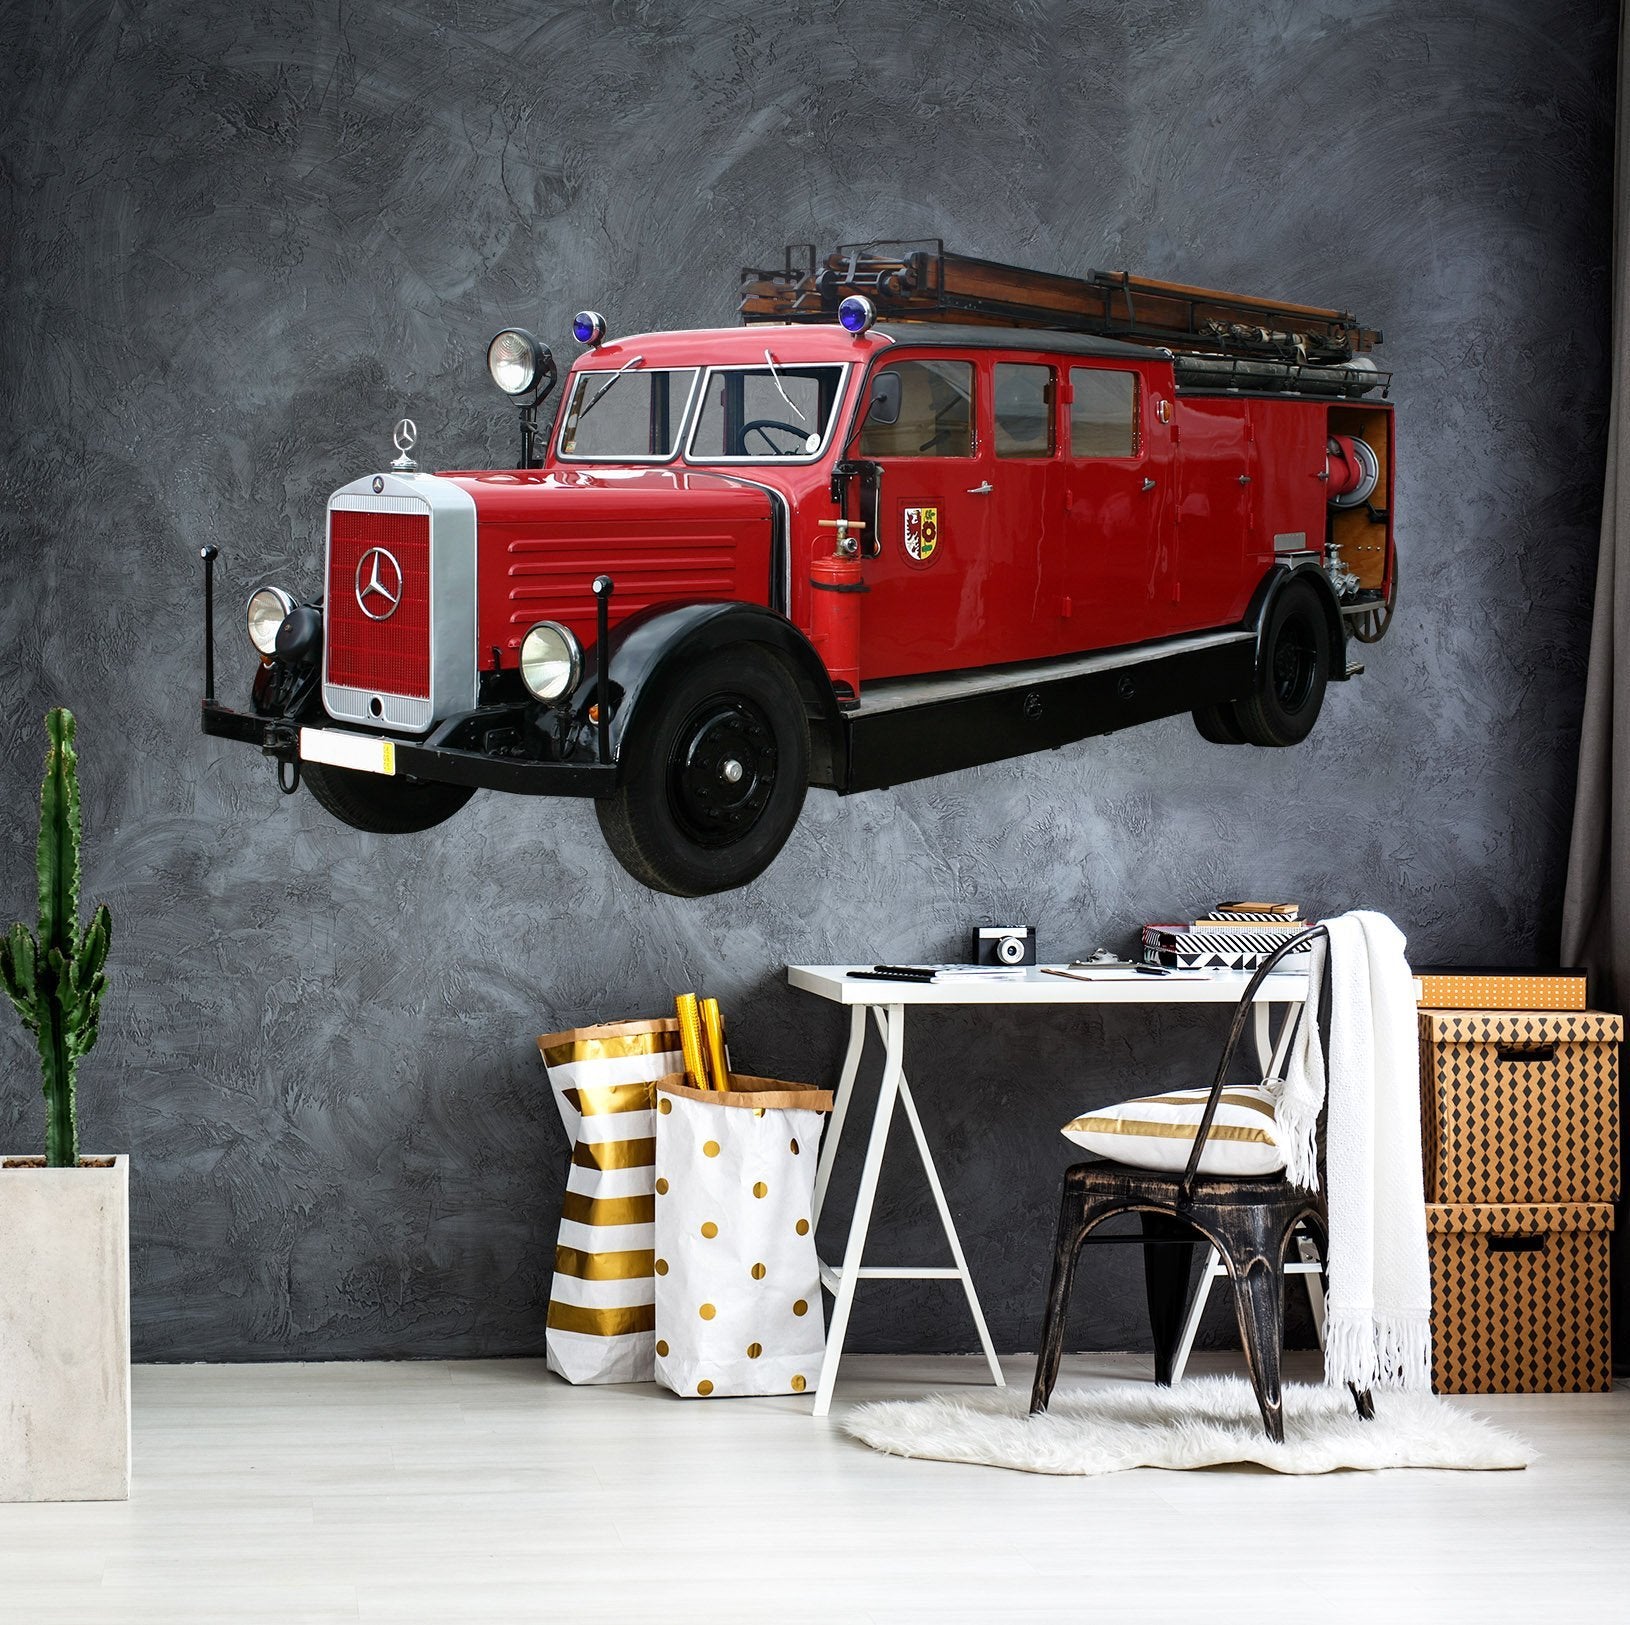 3D Fire-truck 0161 Vehicles Wallpaper AJ Wallpaper 